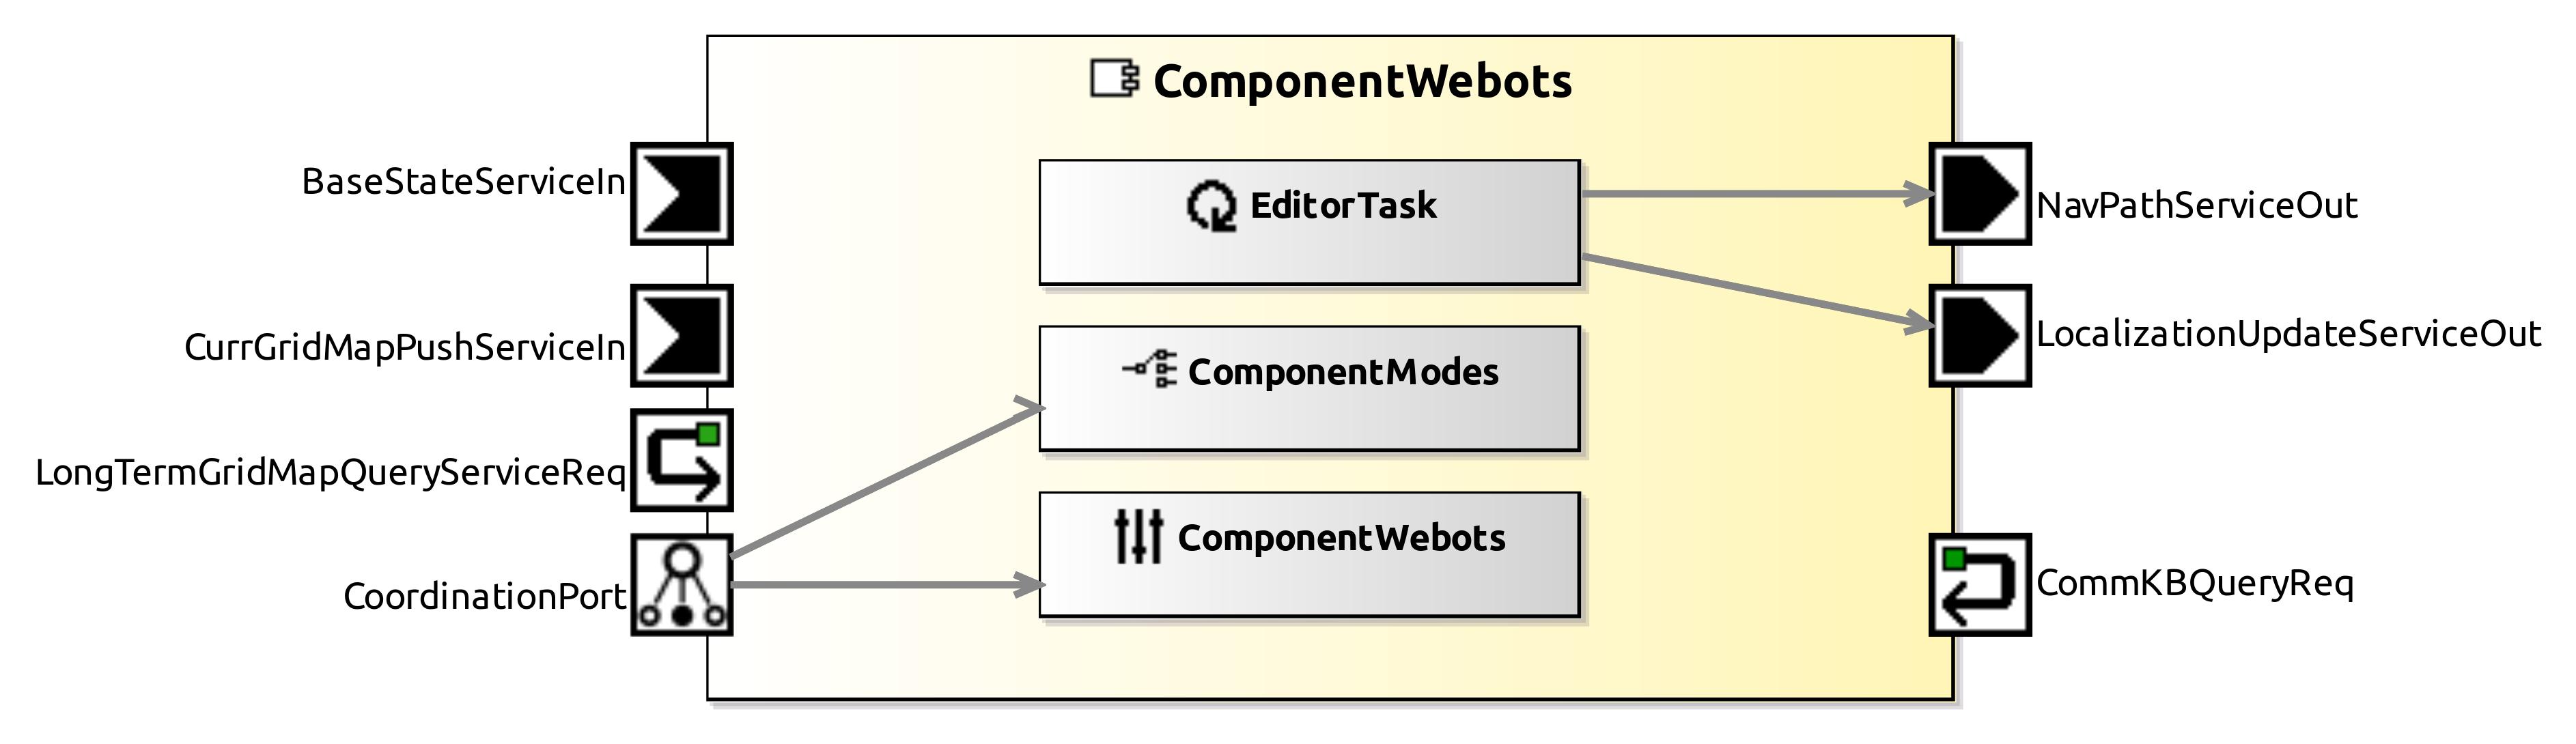 raw.githubusercontent.com_servicerobotics-ulm_componentrepository_master_componentwebots_model_componentwebotscomponentdefinition.jpg